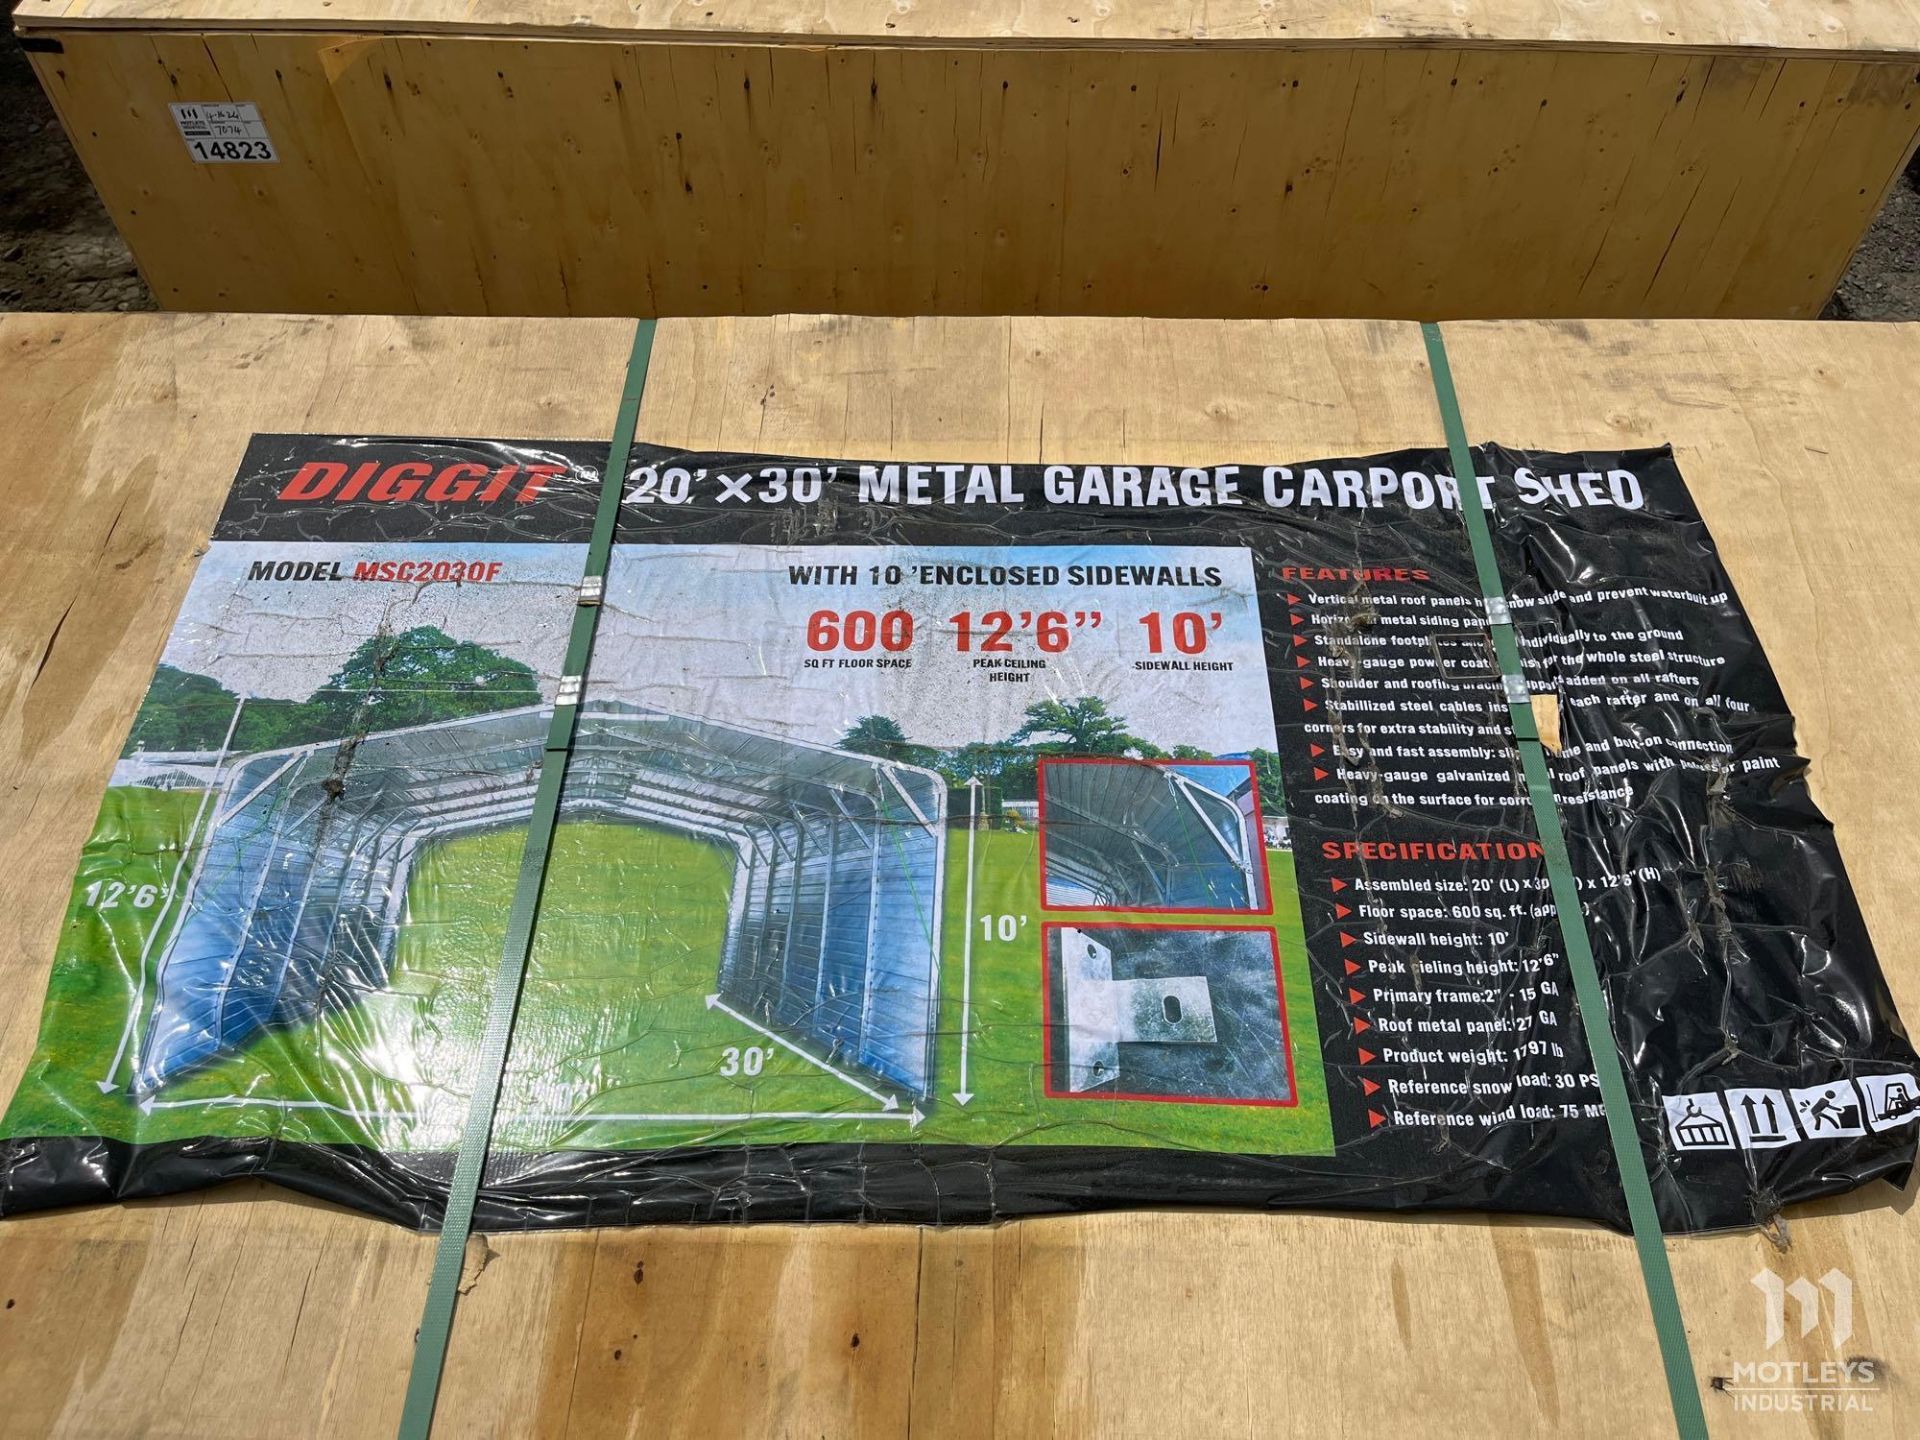 Diggit MSC2030F 20'x30' Metal Garage Carport Shed - Image 5 of 6